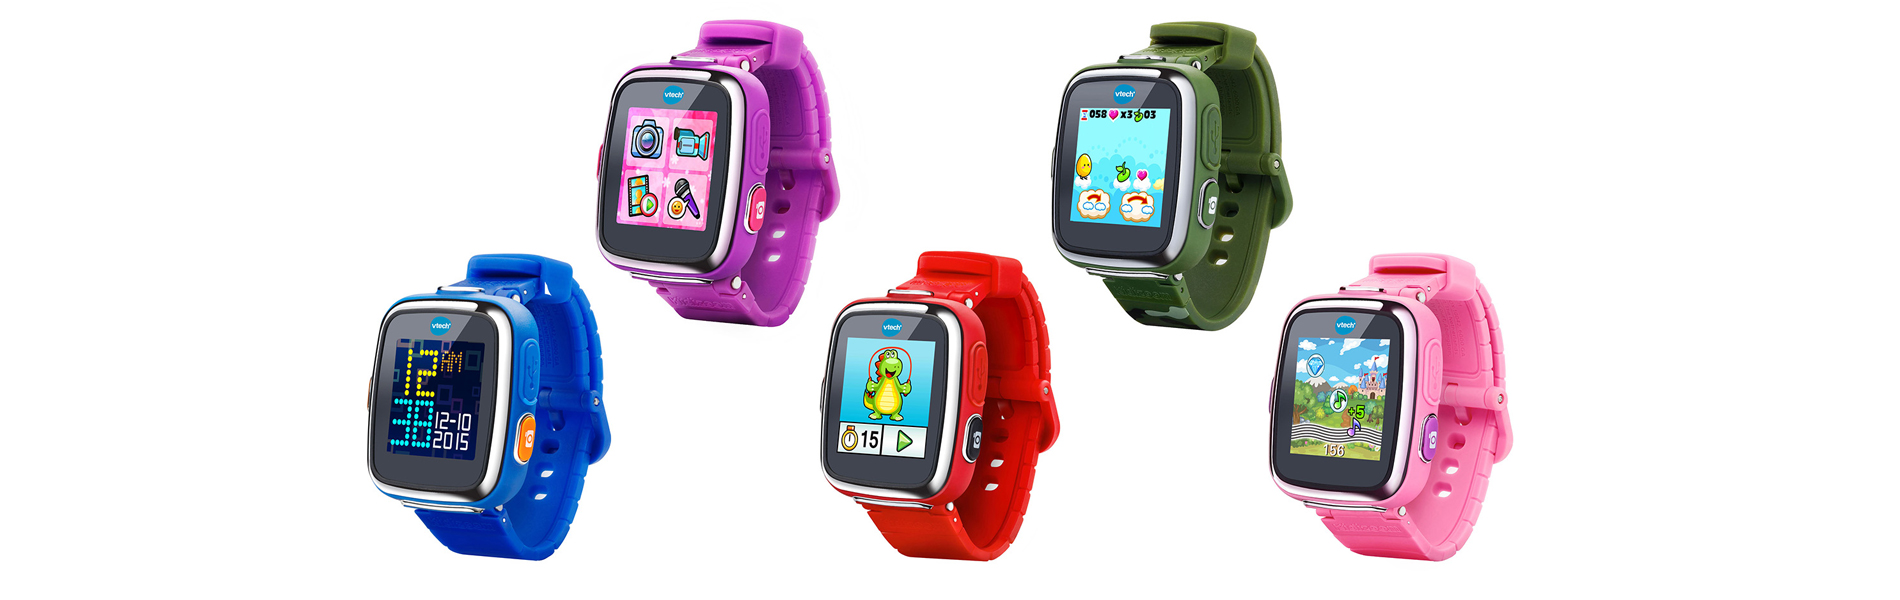 Smartest Watch for Kids Gets Even Smarter with VTech®’s Kidizoom ...